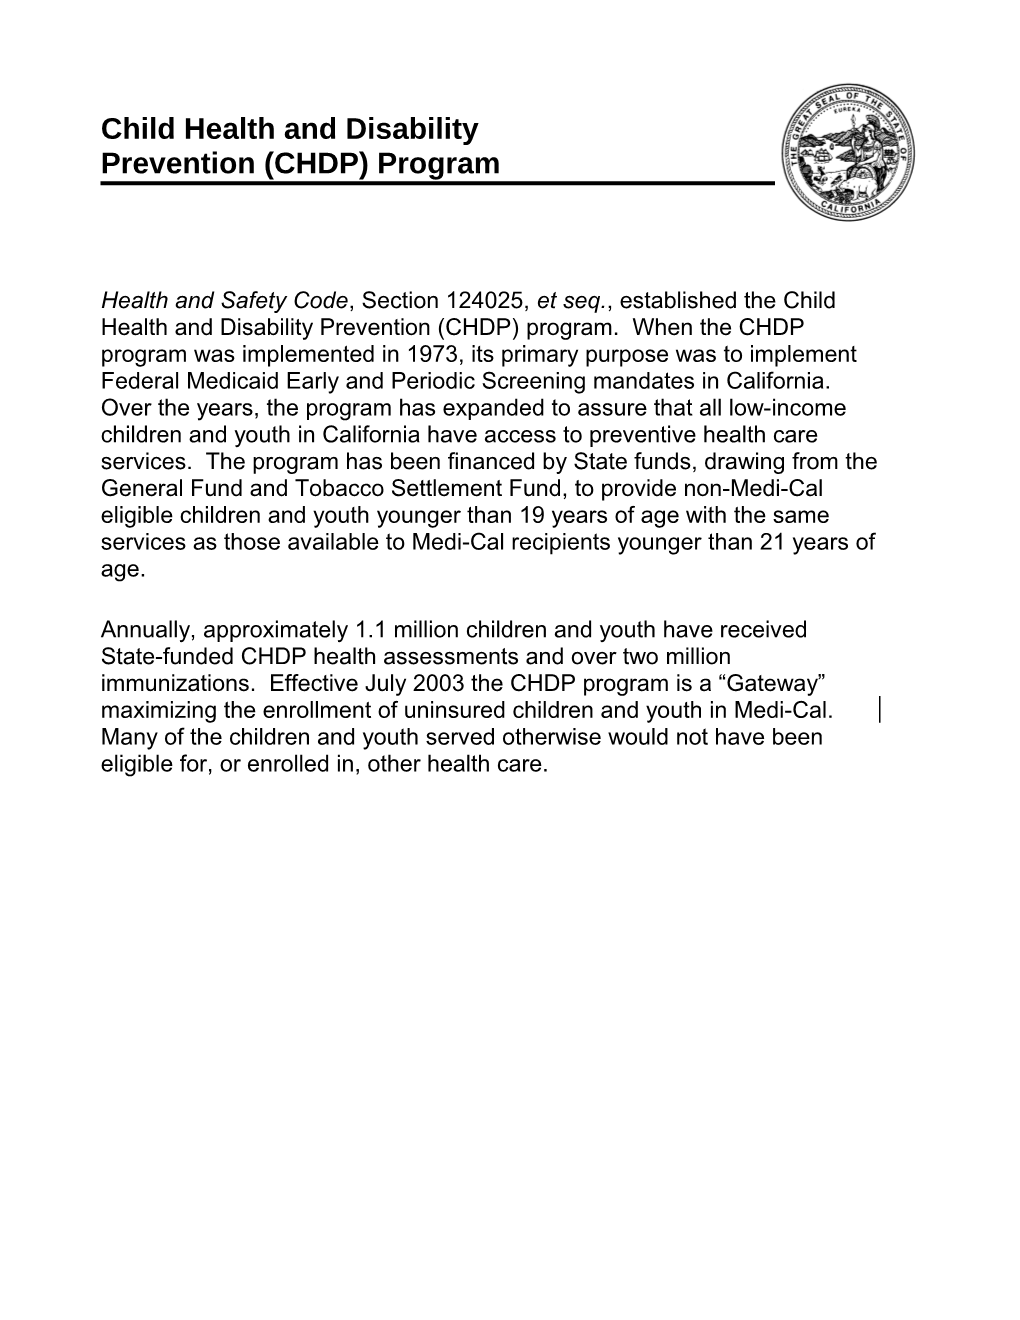 Child Health and Disability Prevention (CHDP) Program (00Chdp)